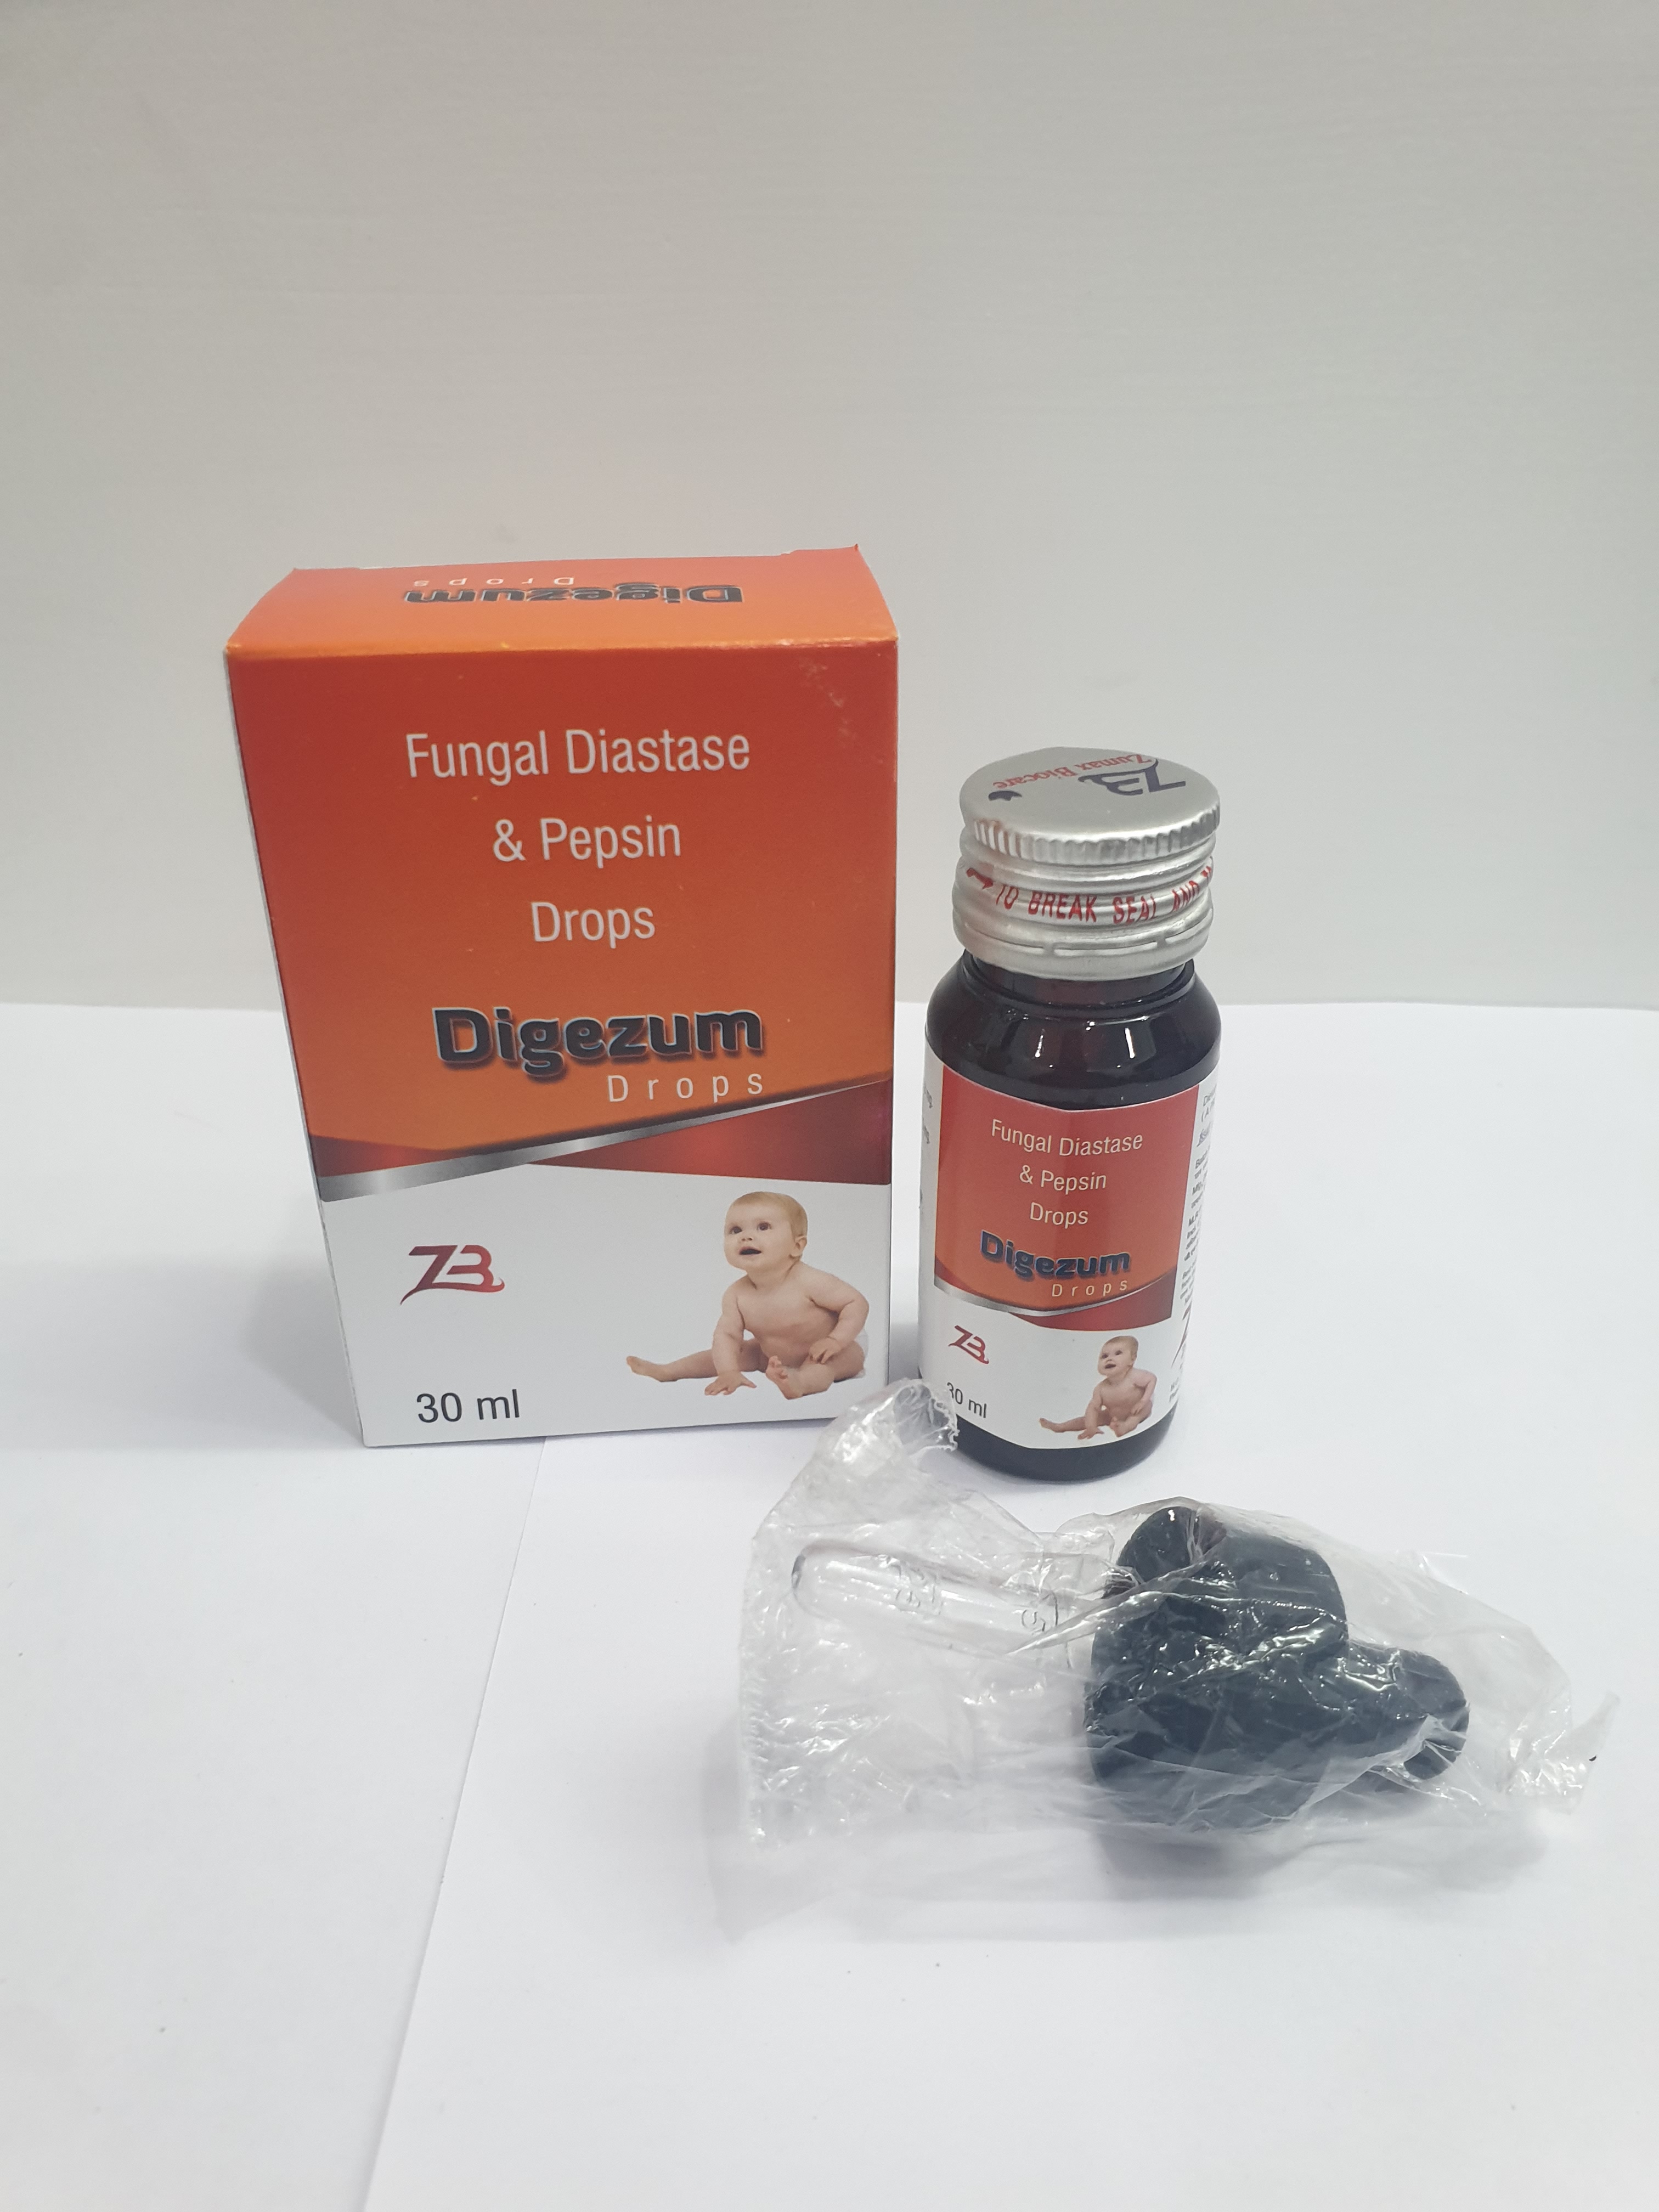 Product Name: Digezum Drops, Compositions of Fungal Diastate  & Pepsin Drops are Fungal Diastate  & Pepsin Drops - Zumax Biocare